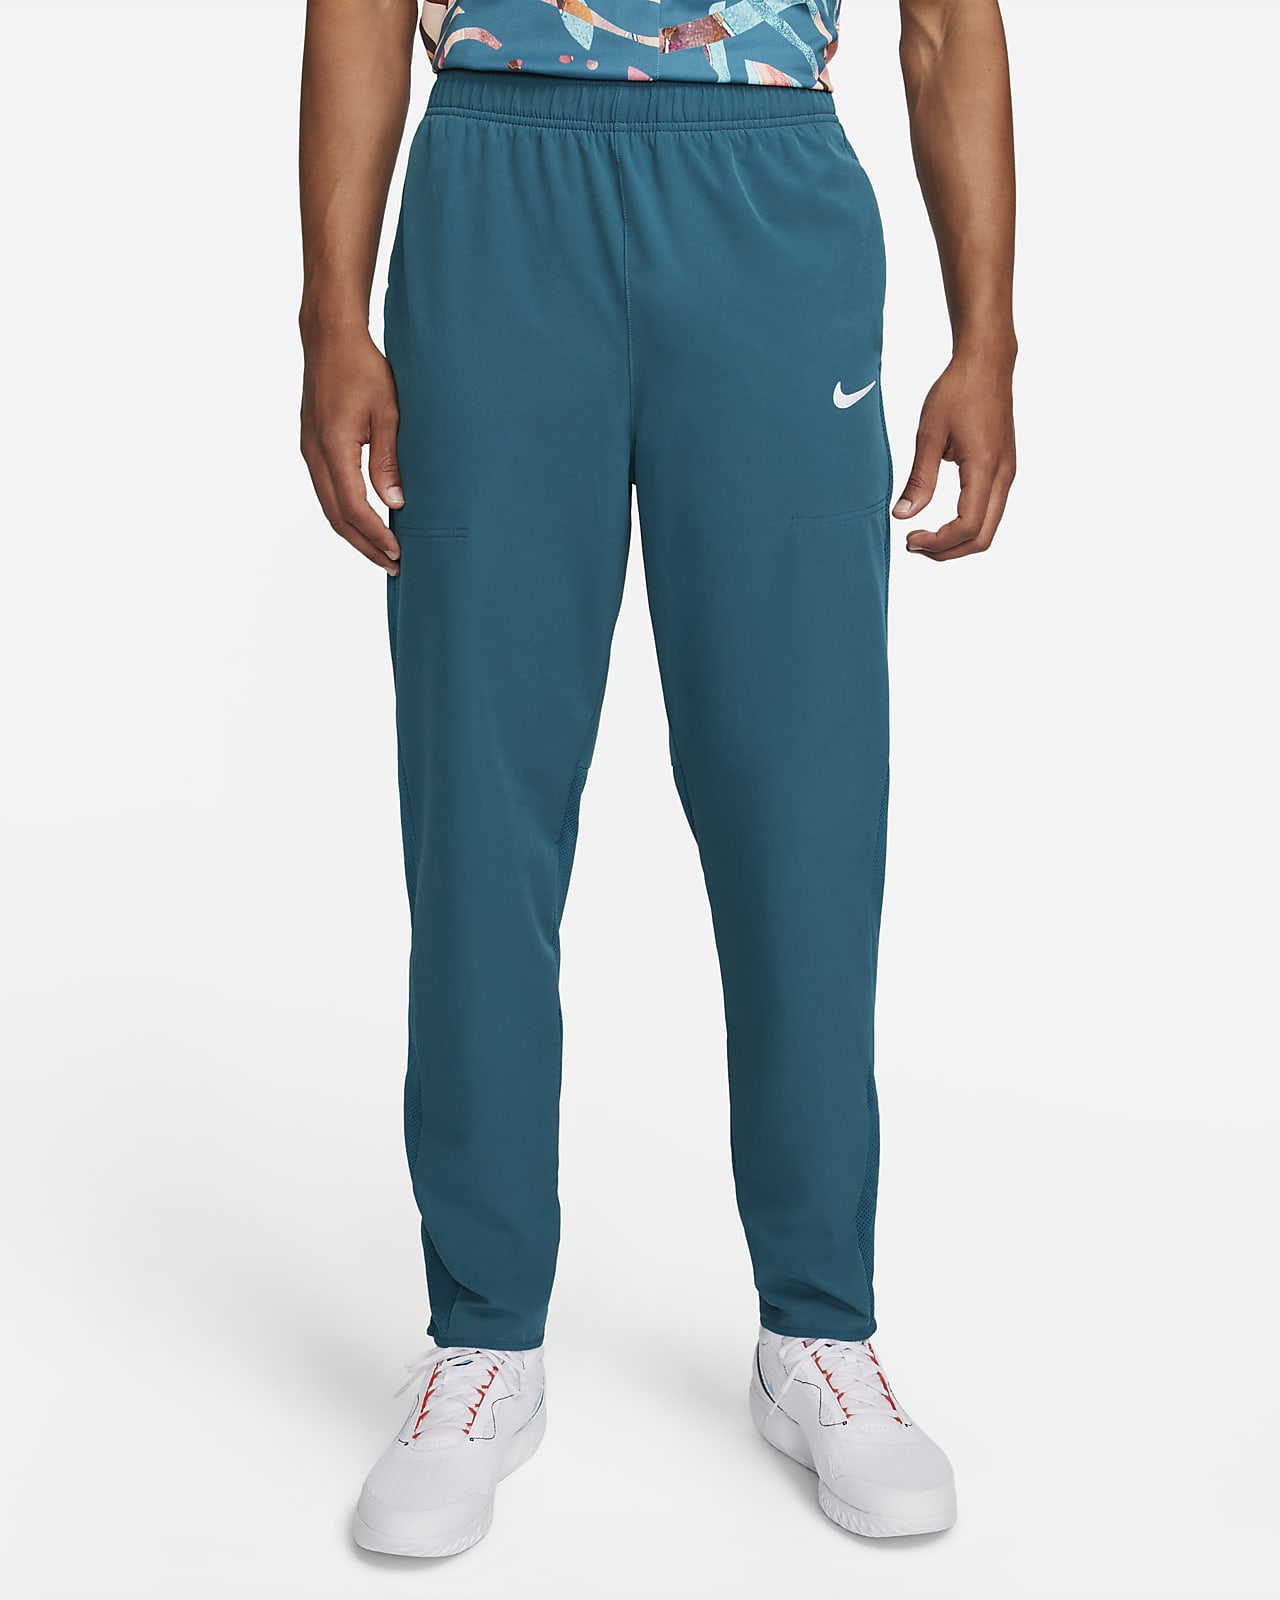 NikeCourt Men's Tennis Trousers